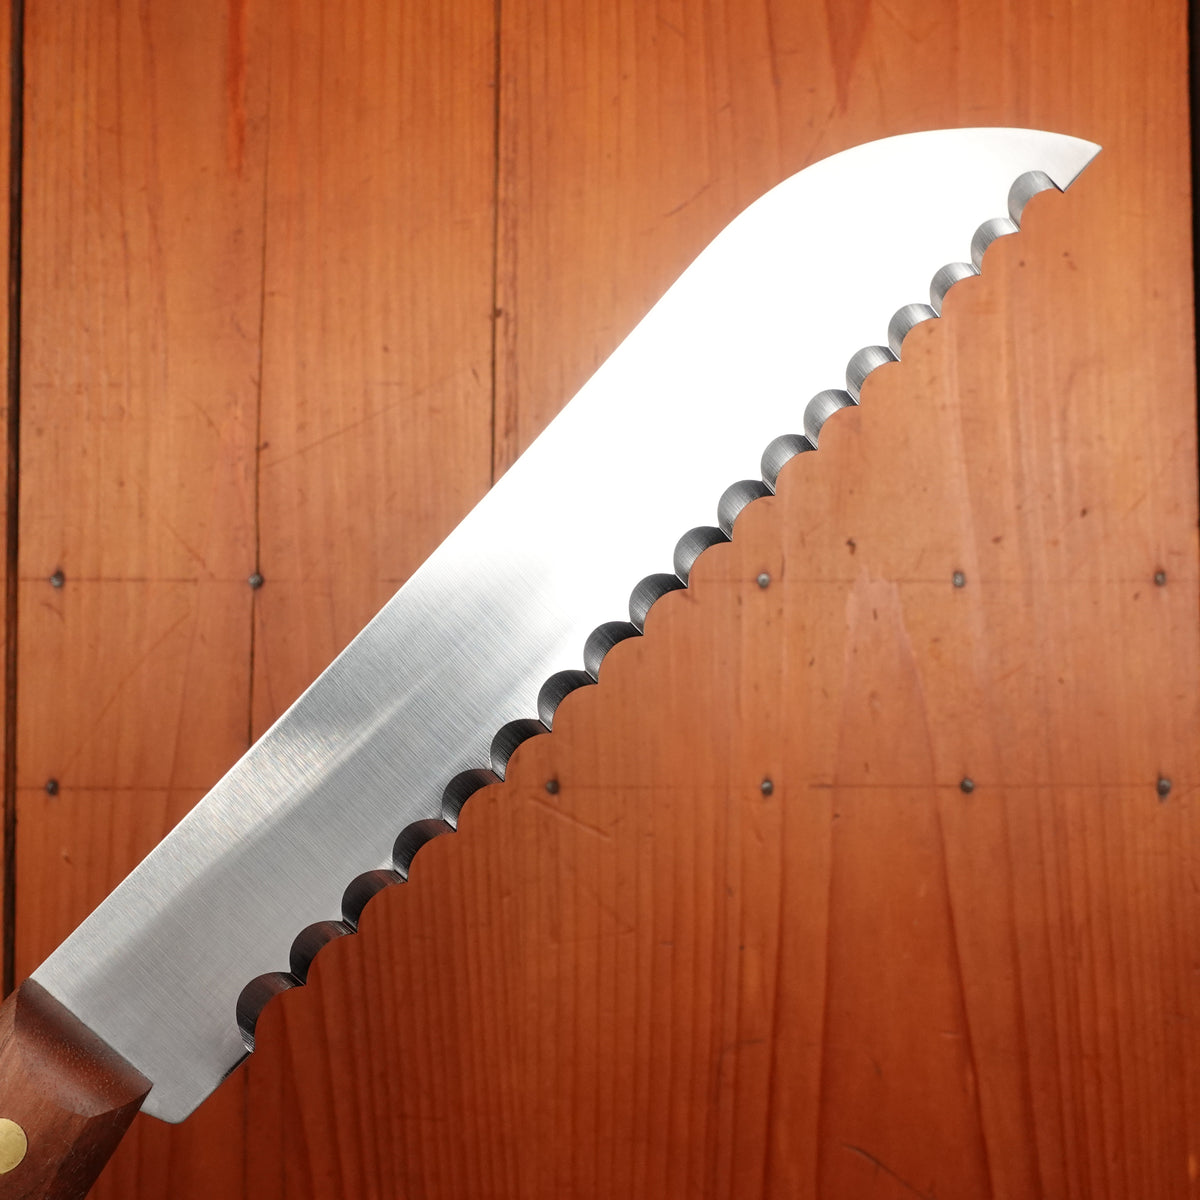 Friedr Herder 8” Serrated Boscher Knife Carbon Walnut